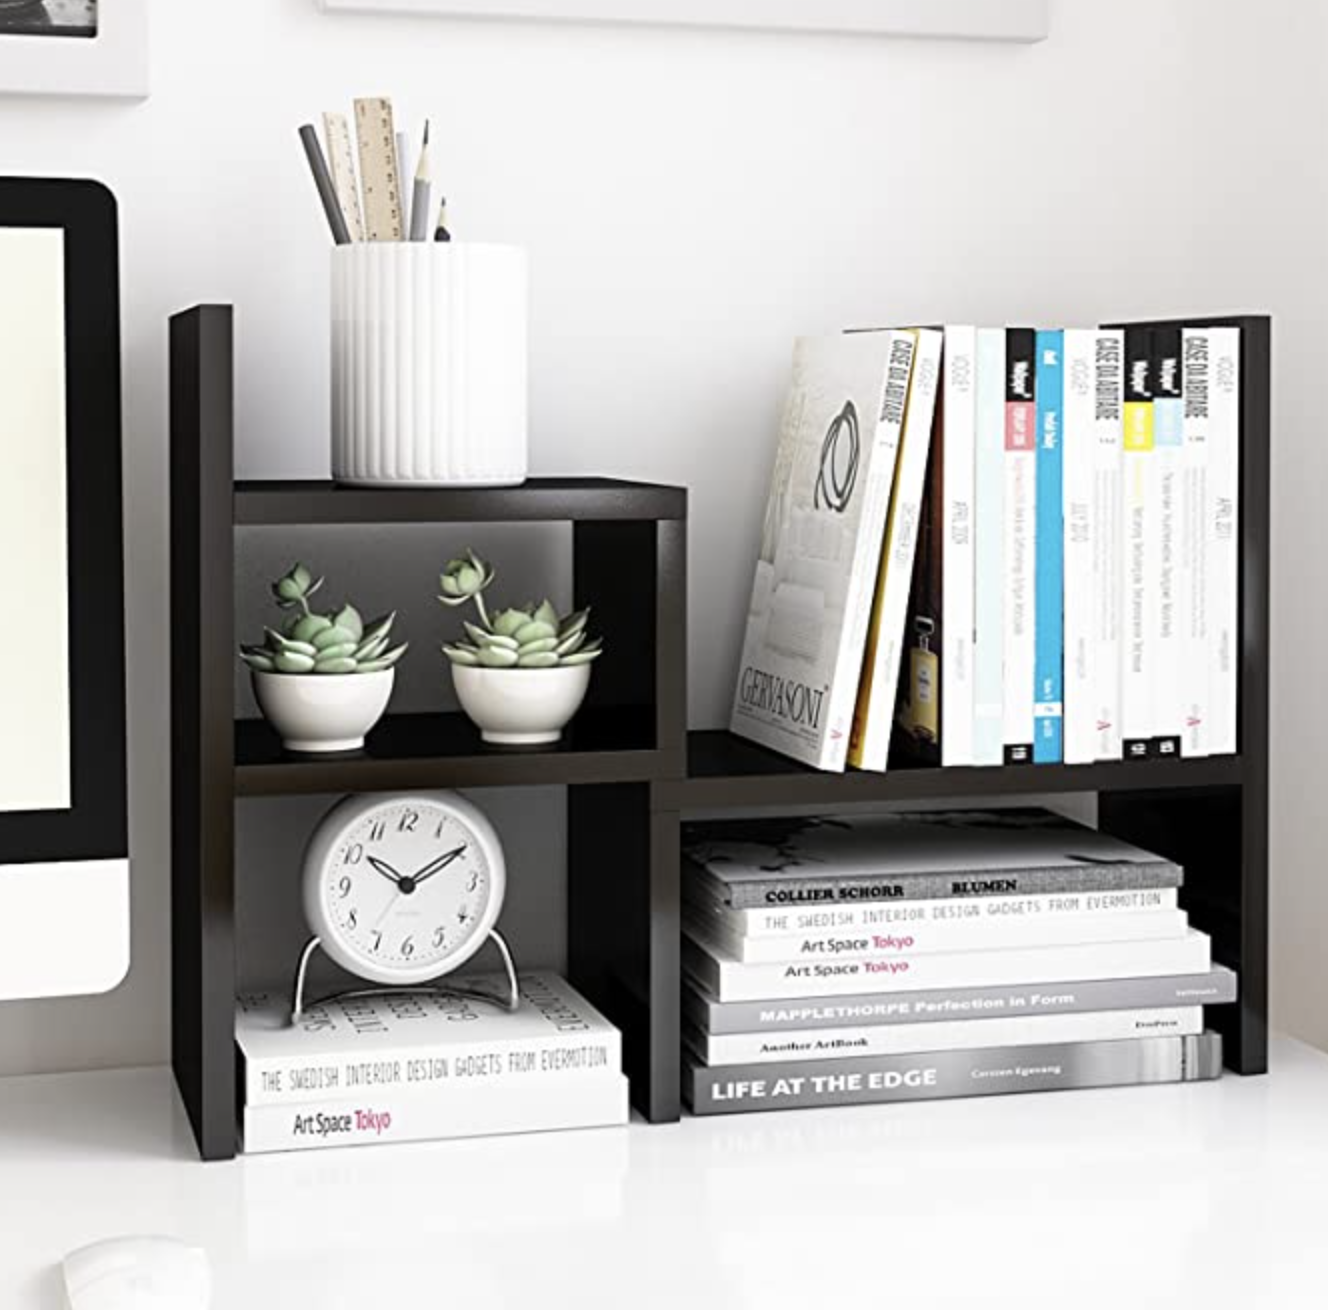 Blog Talk: Home Office Essentials